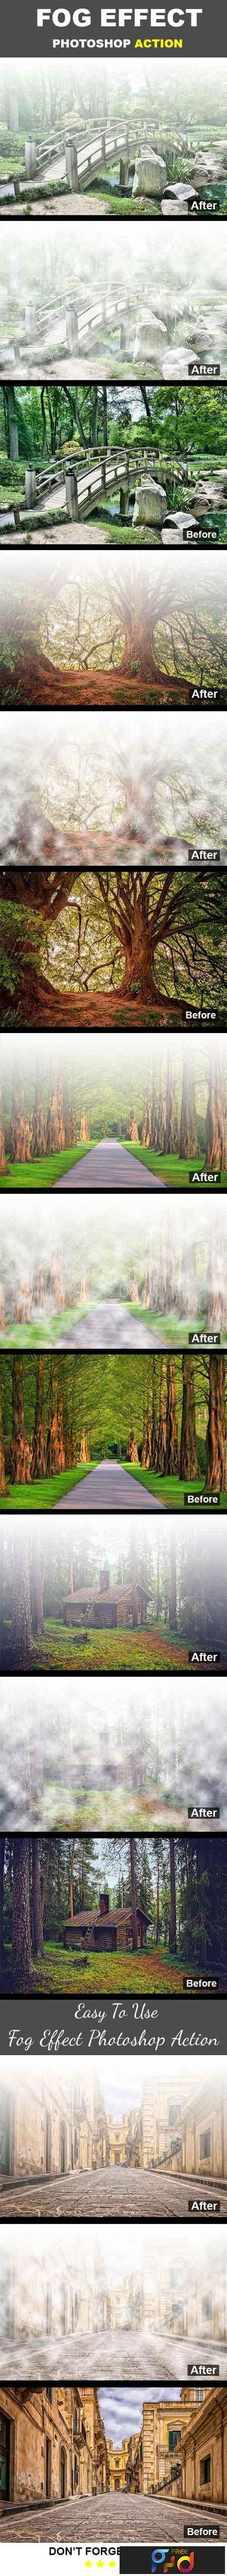 Fog Effect Photoshop Action 22753613 1